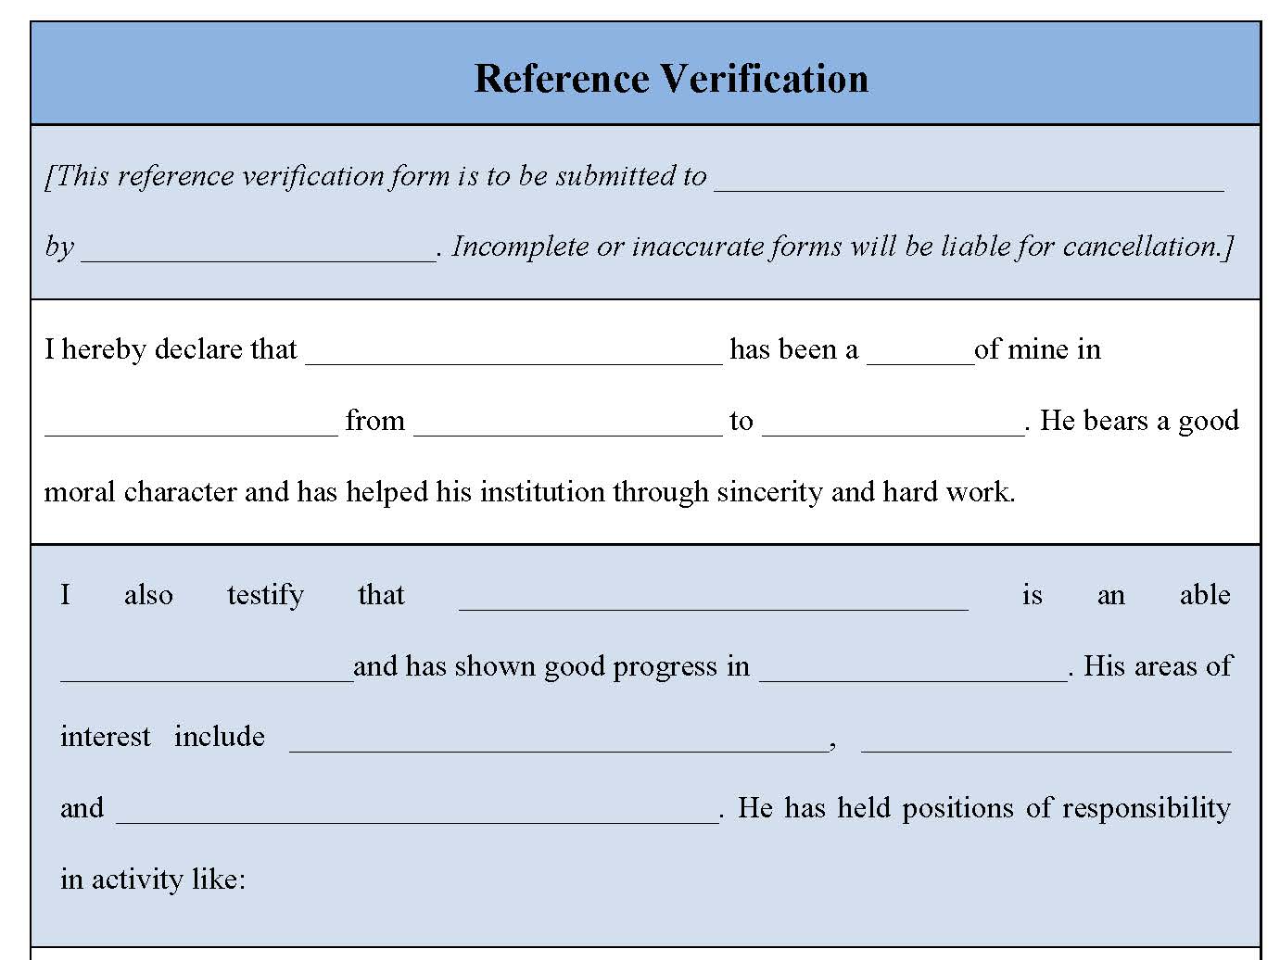 Reference Verification Form